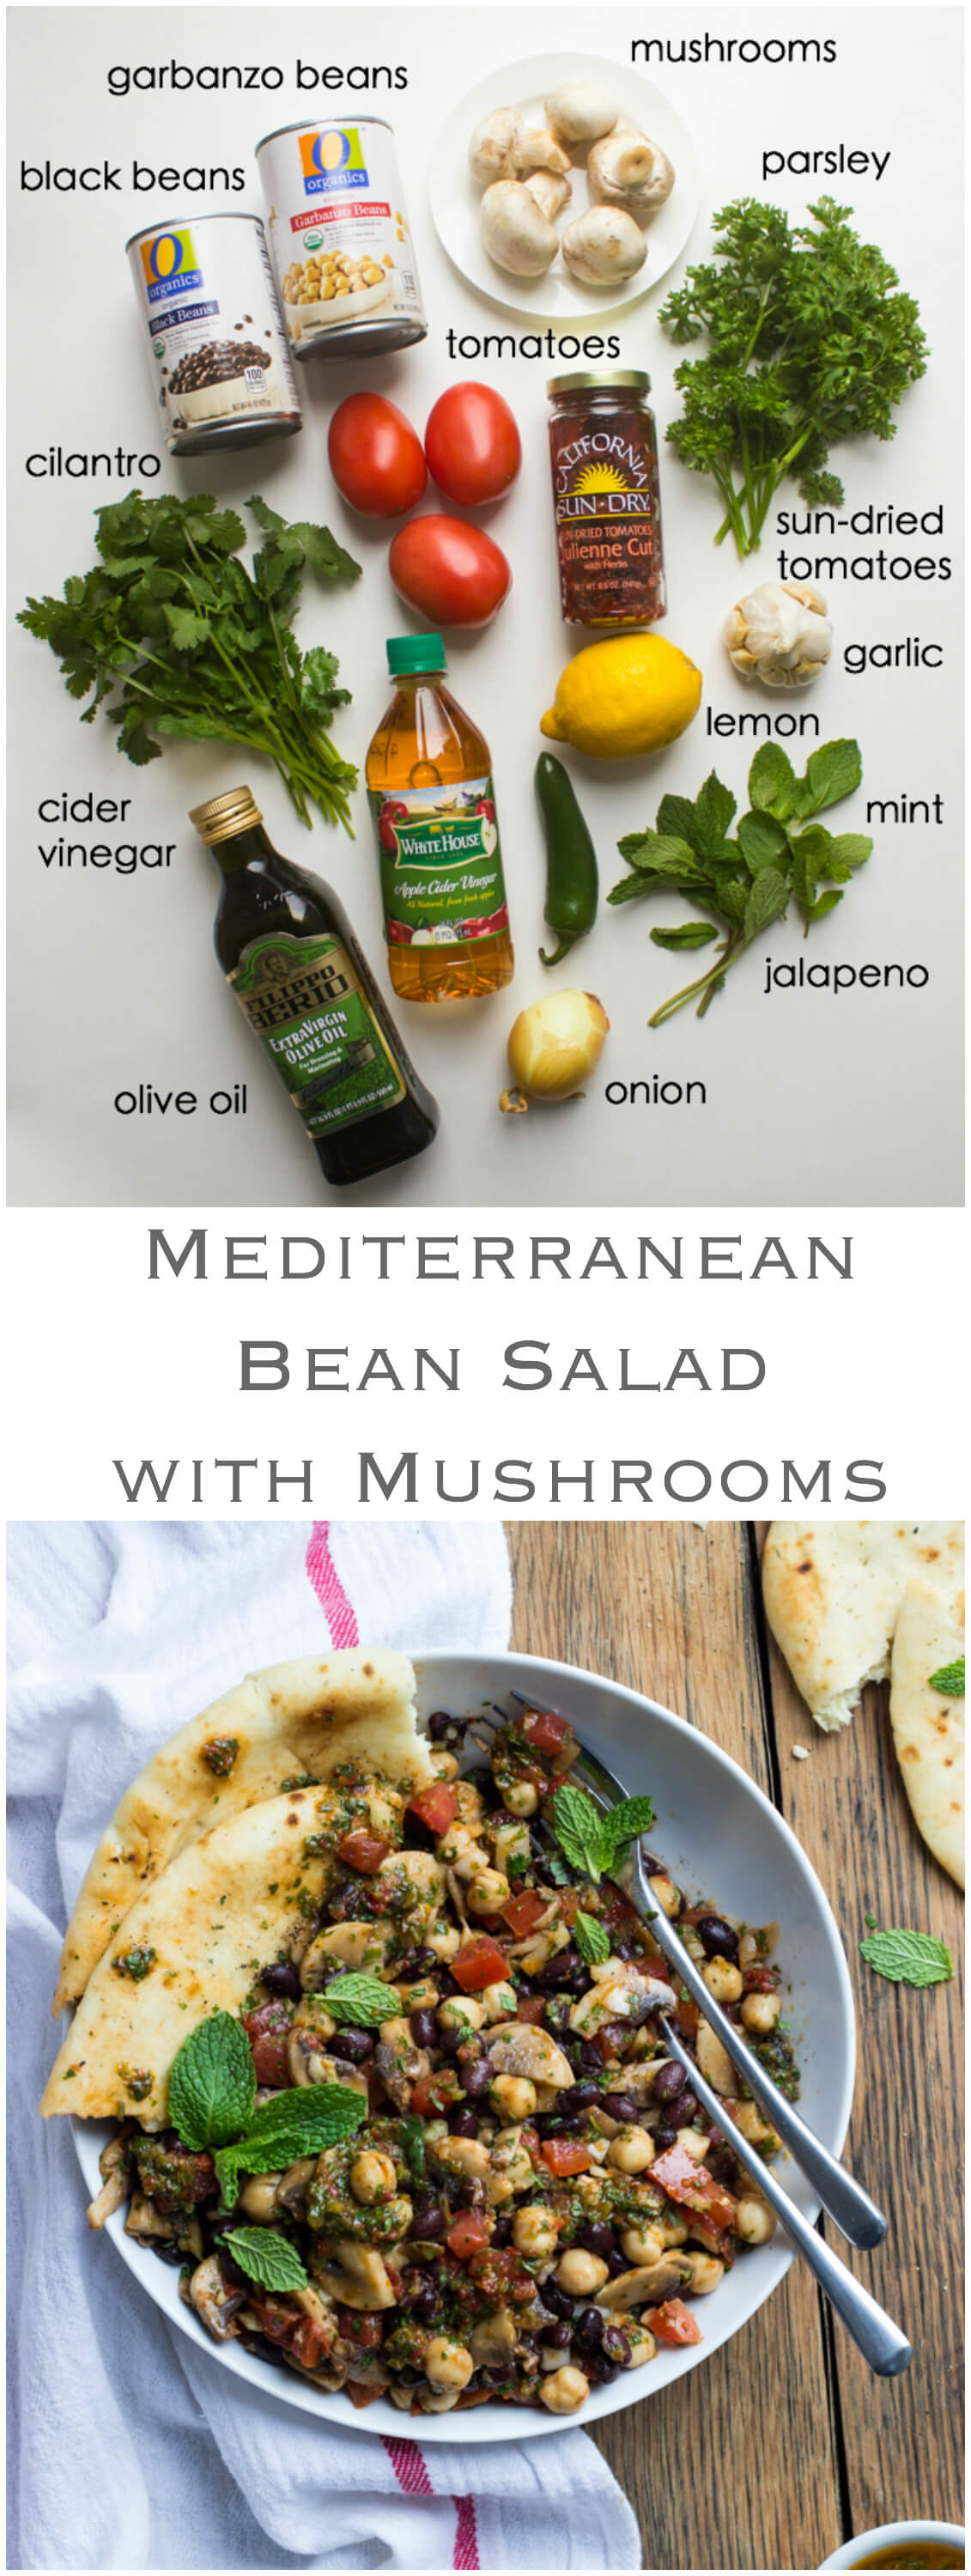 Mediterranean Bean Salad with Mushrooms - this side is a flavor bomb! So easy to make with simple ingredients. Plus it's vegetarian and vegan! | littlebroken.com @littlebroken